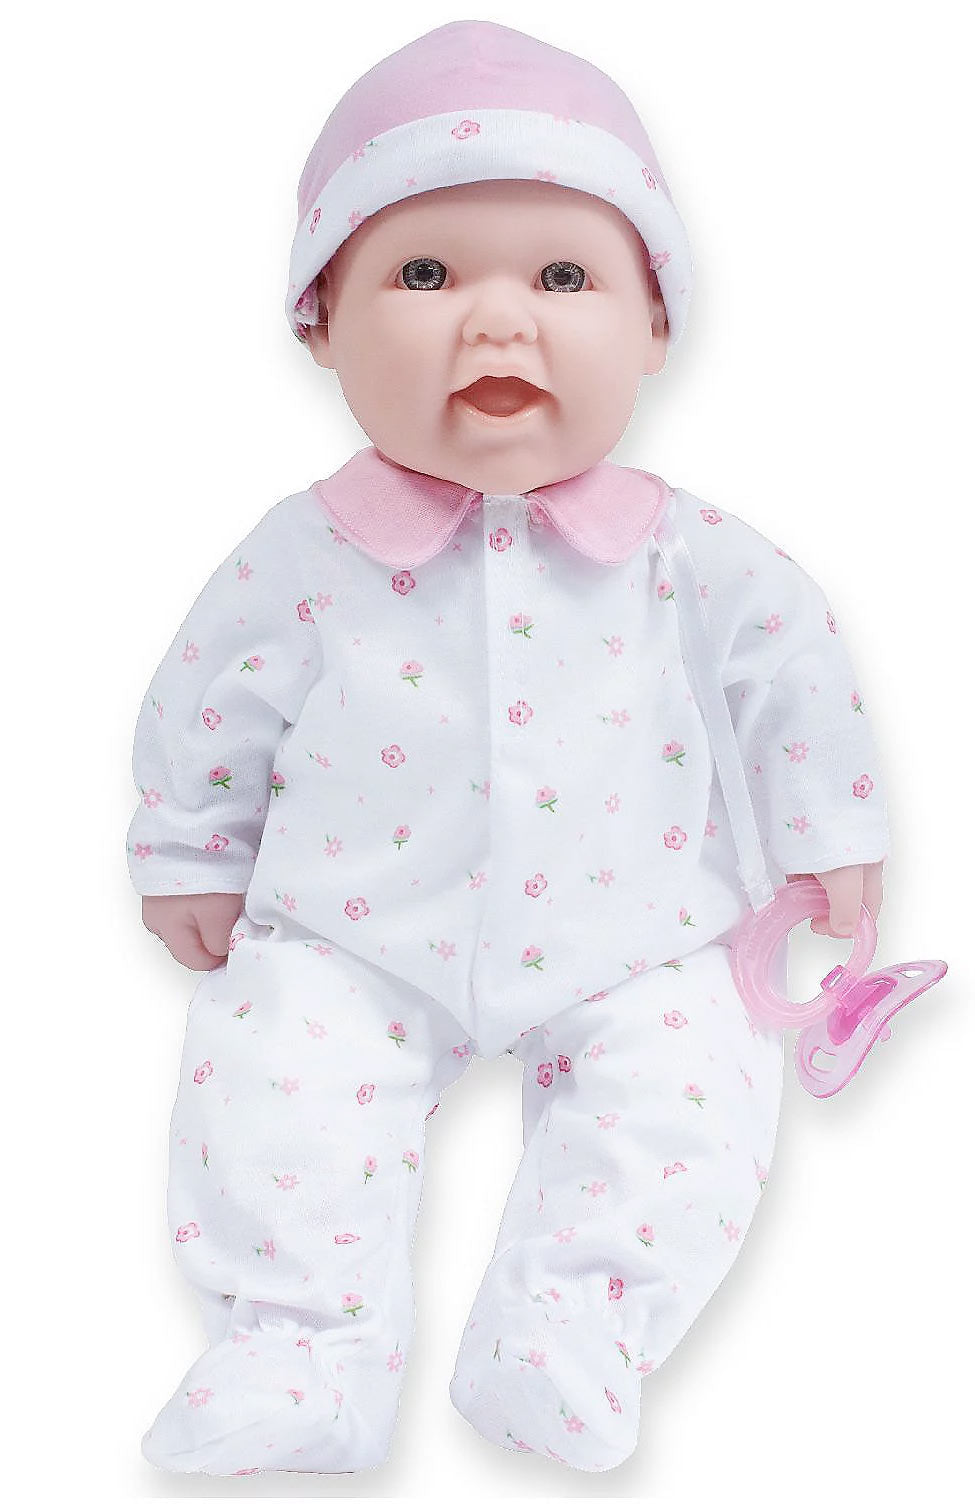 La Baby 16" Caucasian Soft Body Baby Doll